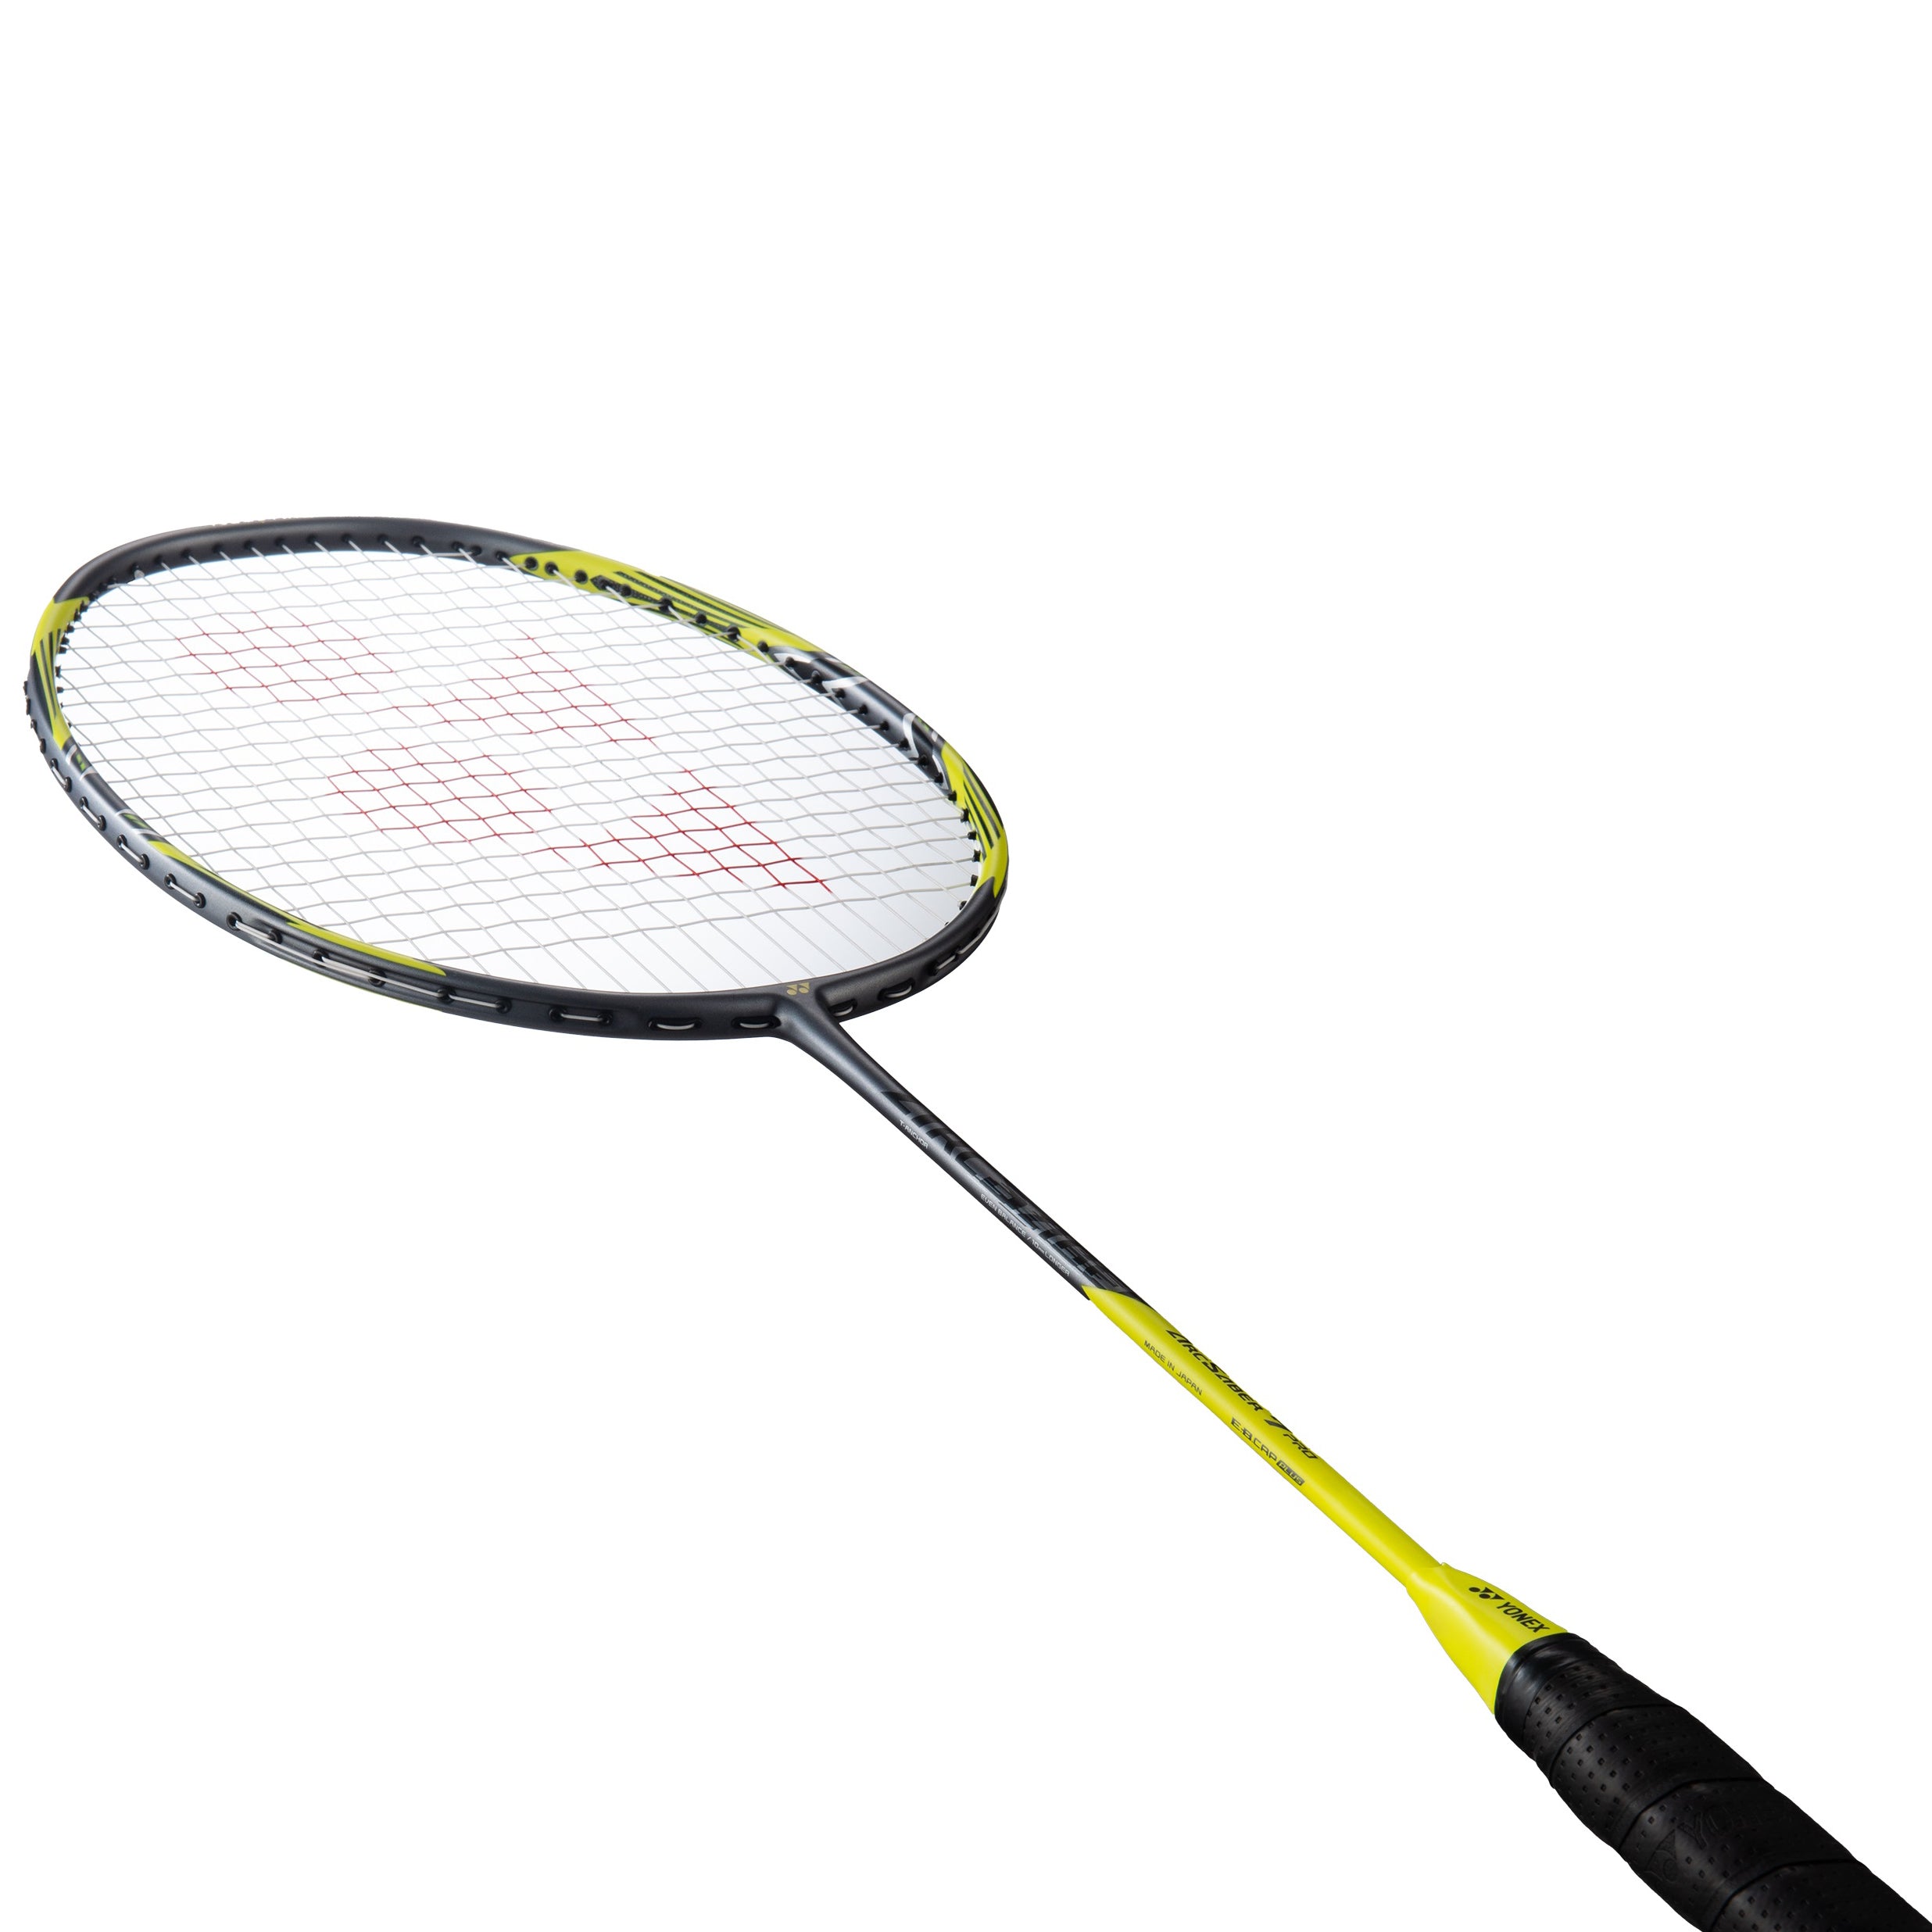 Yonex Arcsaber 7 Pro Badminton Racquet, Grey/Yellow (4UG5